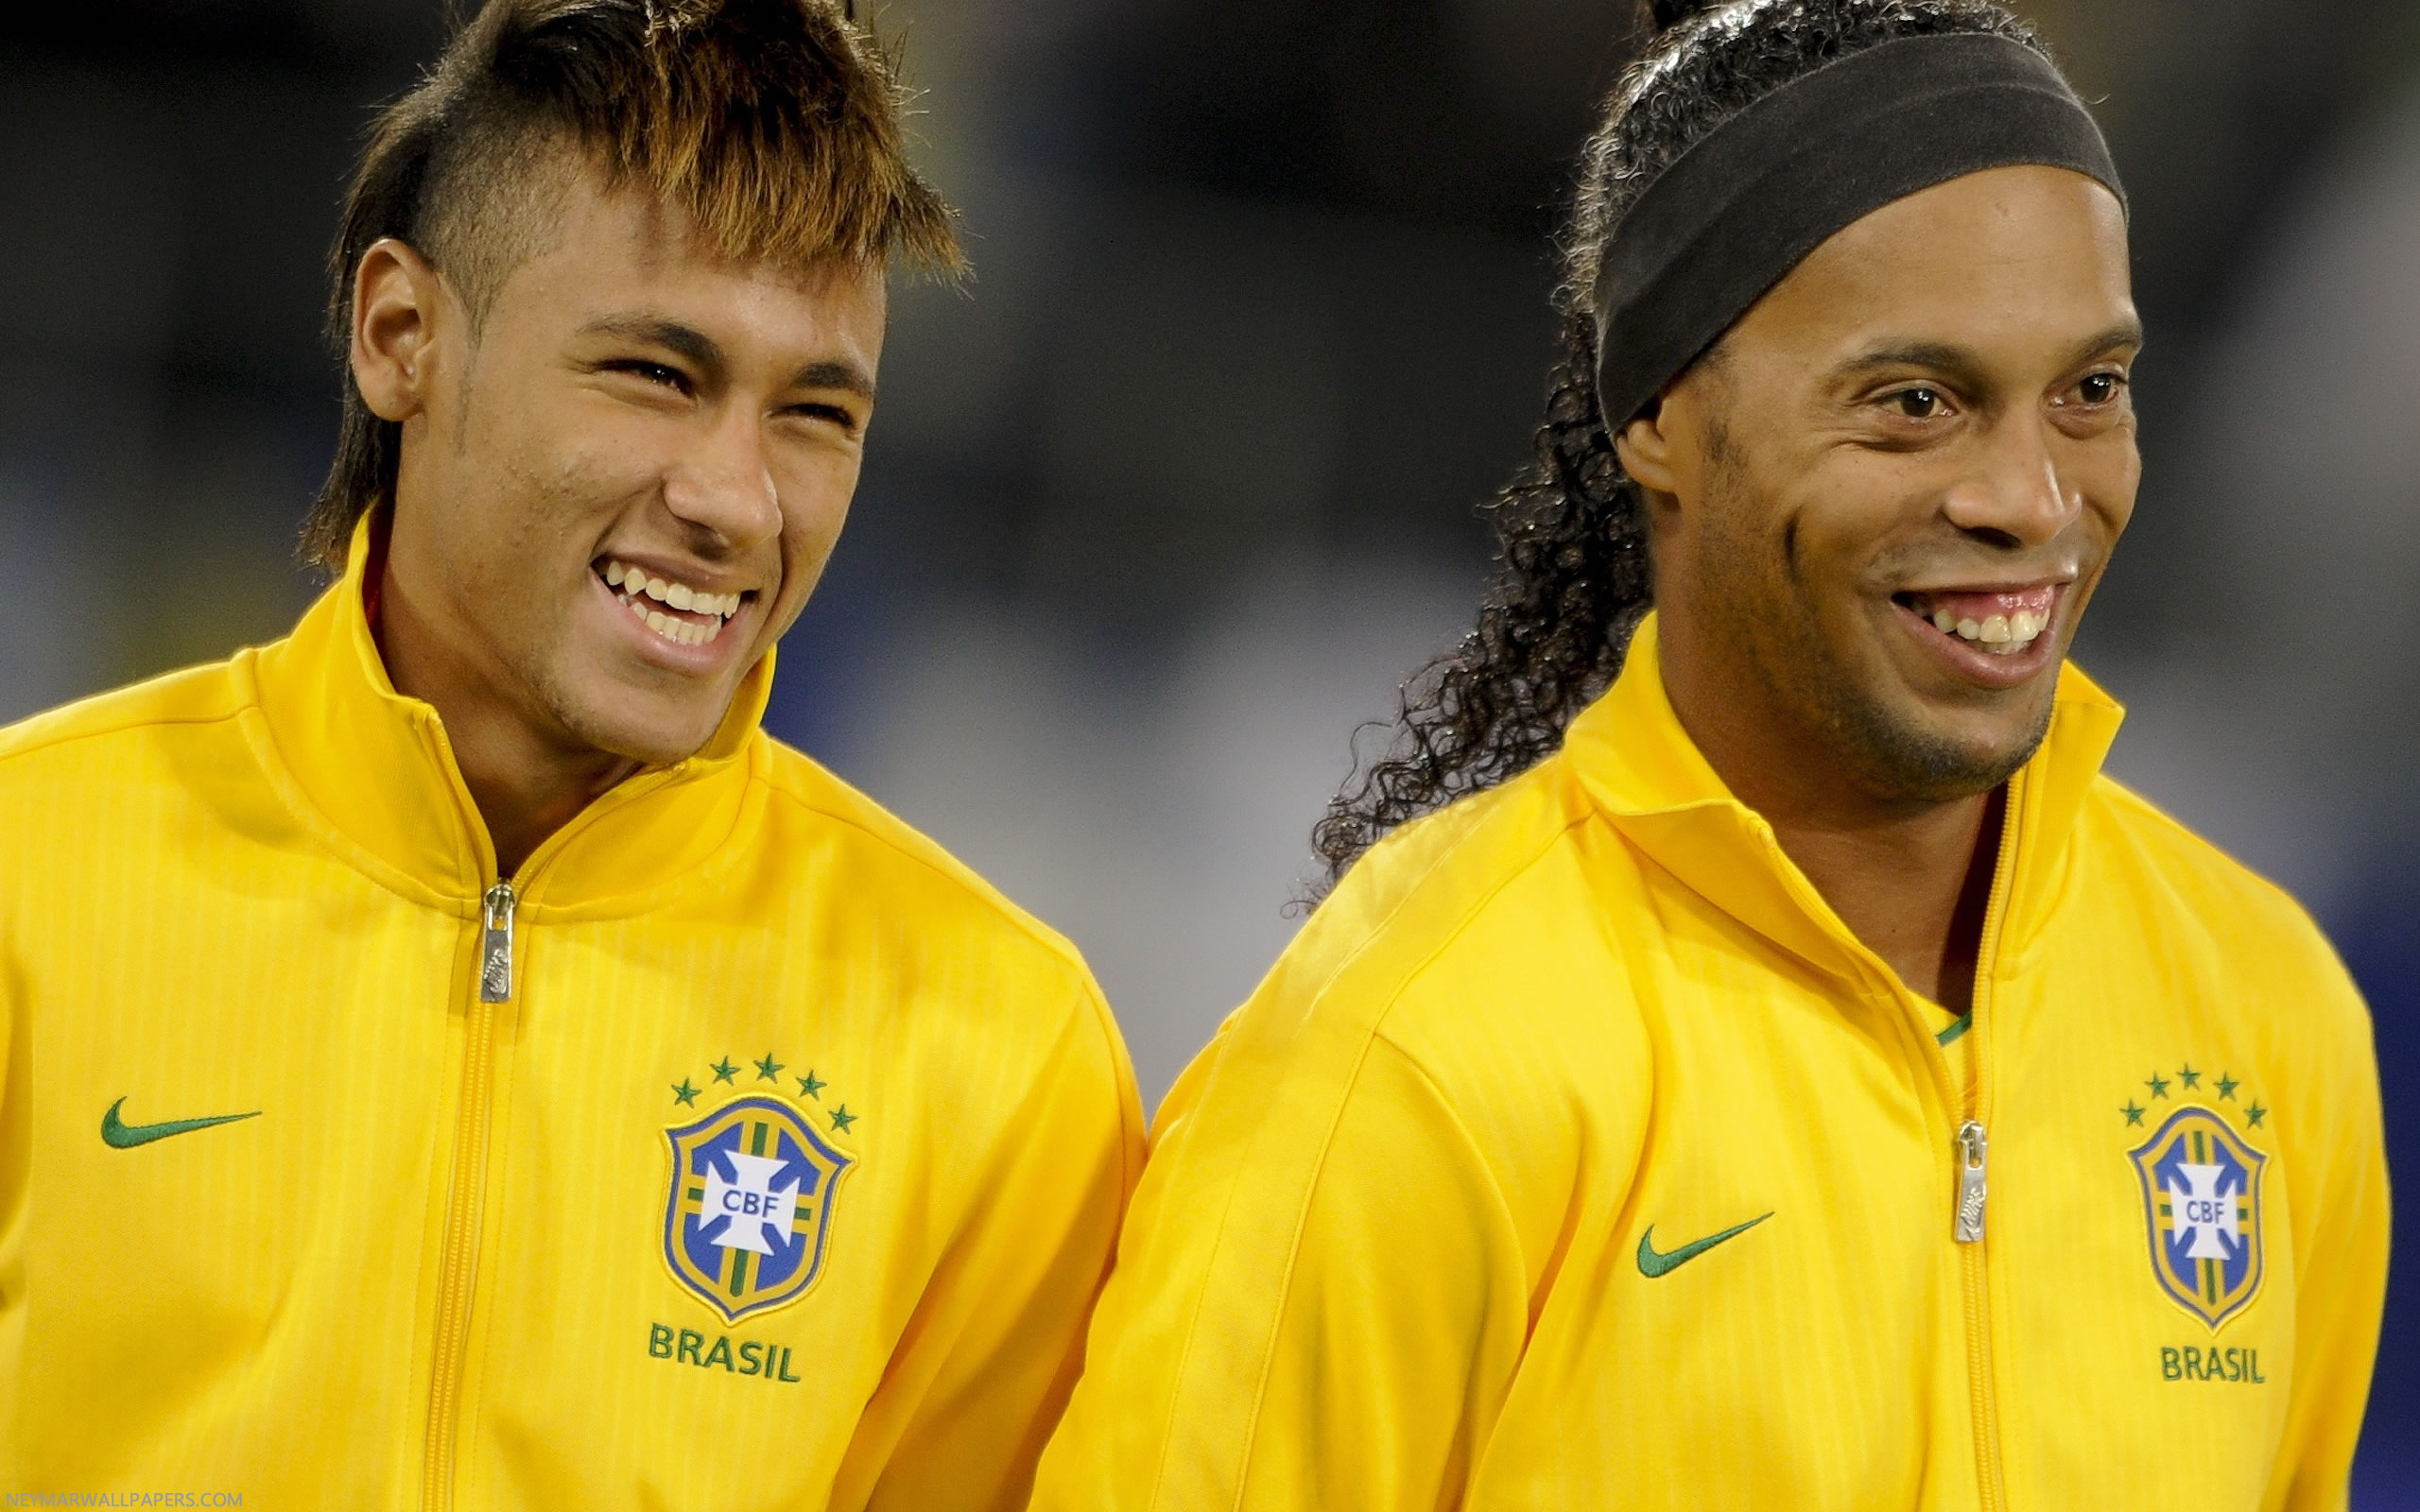 Neymar and Ronaldinho